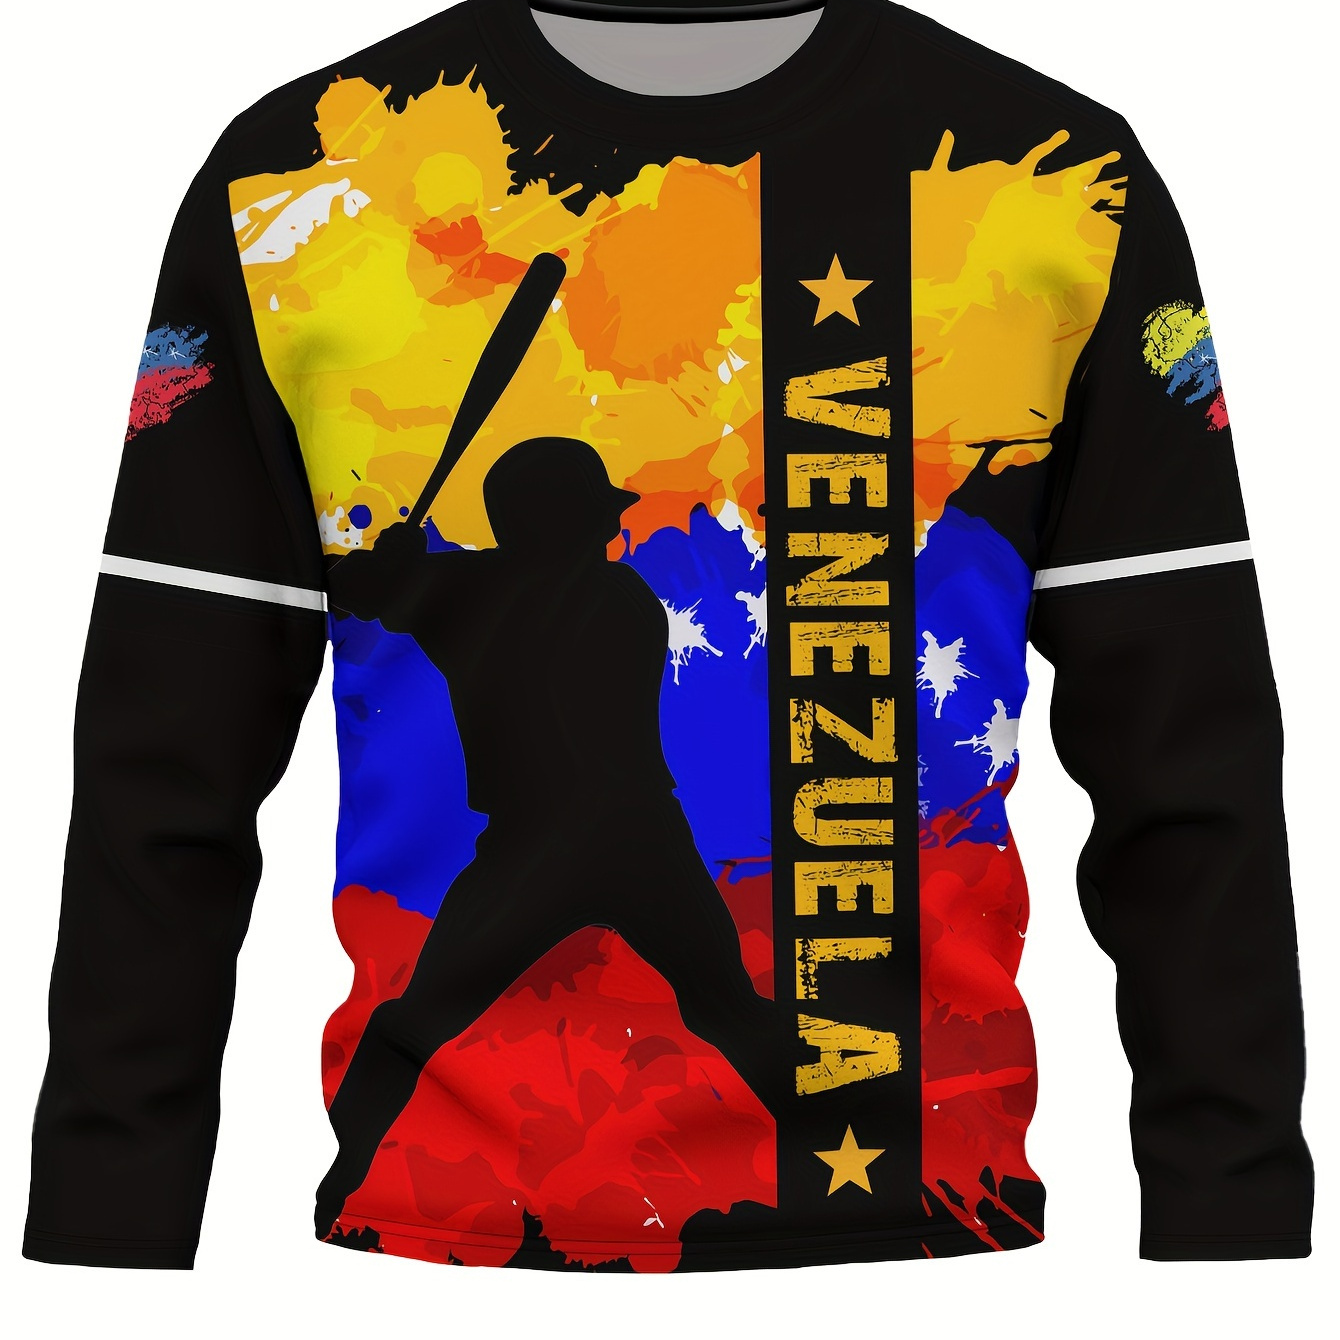 

Venezuela Baseball Print, Men's Graphic Design Crew Neck Long Sleeves T-shirt, Casual Comfy Sweatshirt For Spring Autumn, Men's Novelty Tops